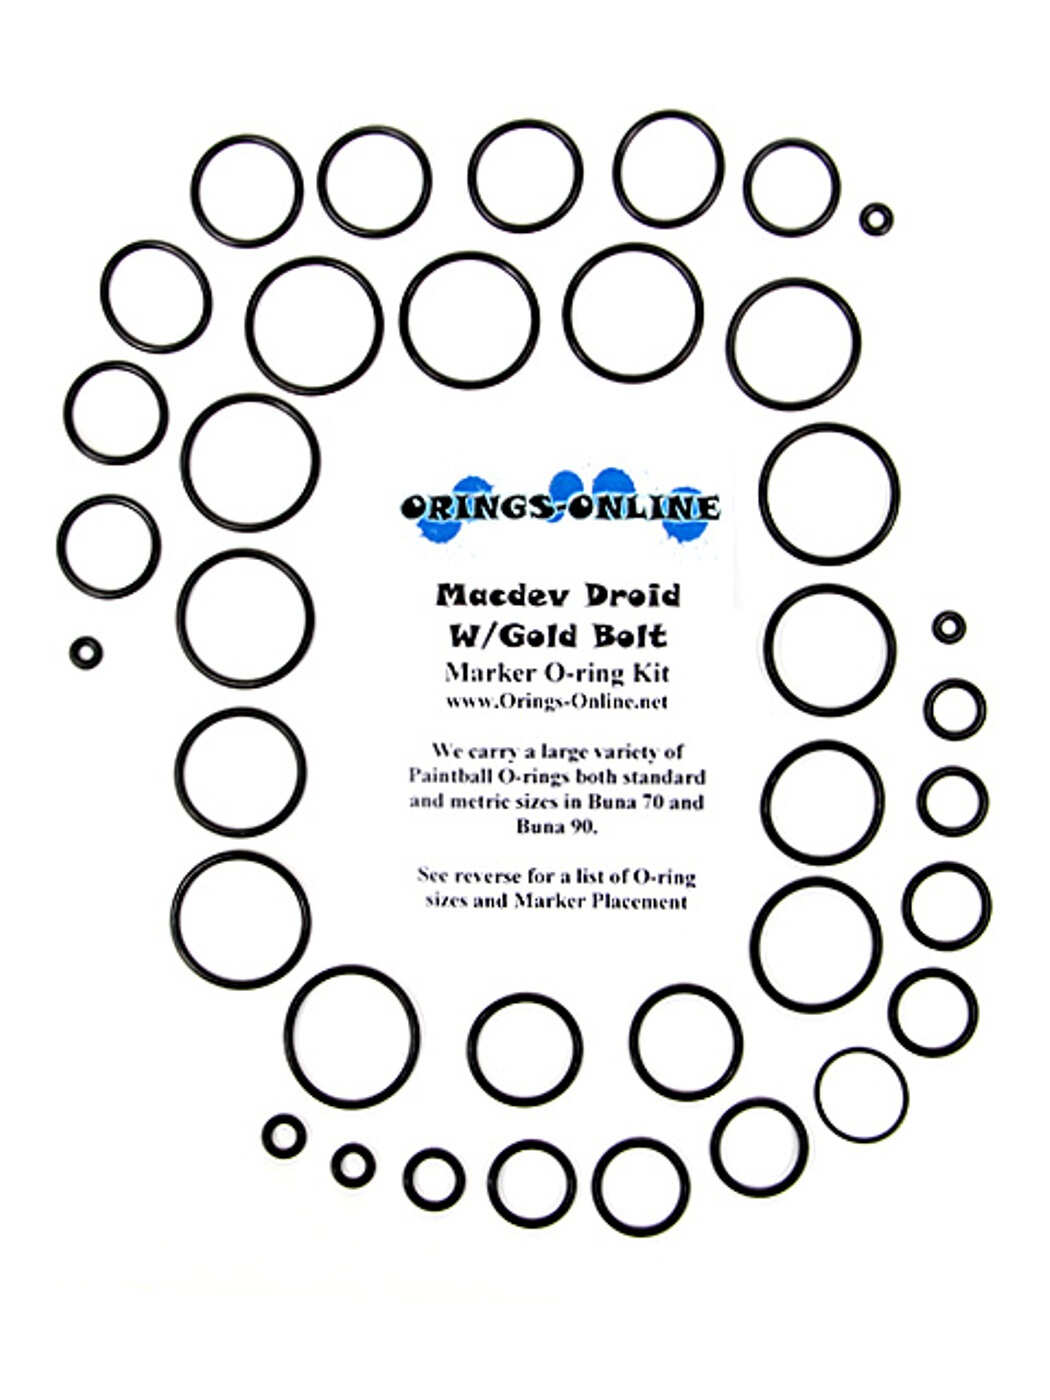 kits Macdev Cyborg Paintball Marker O-ring Oring Kit x 2 rebuilds 